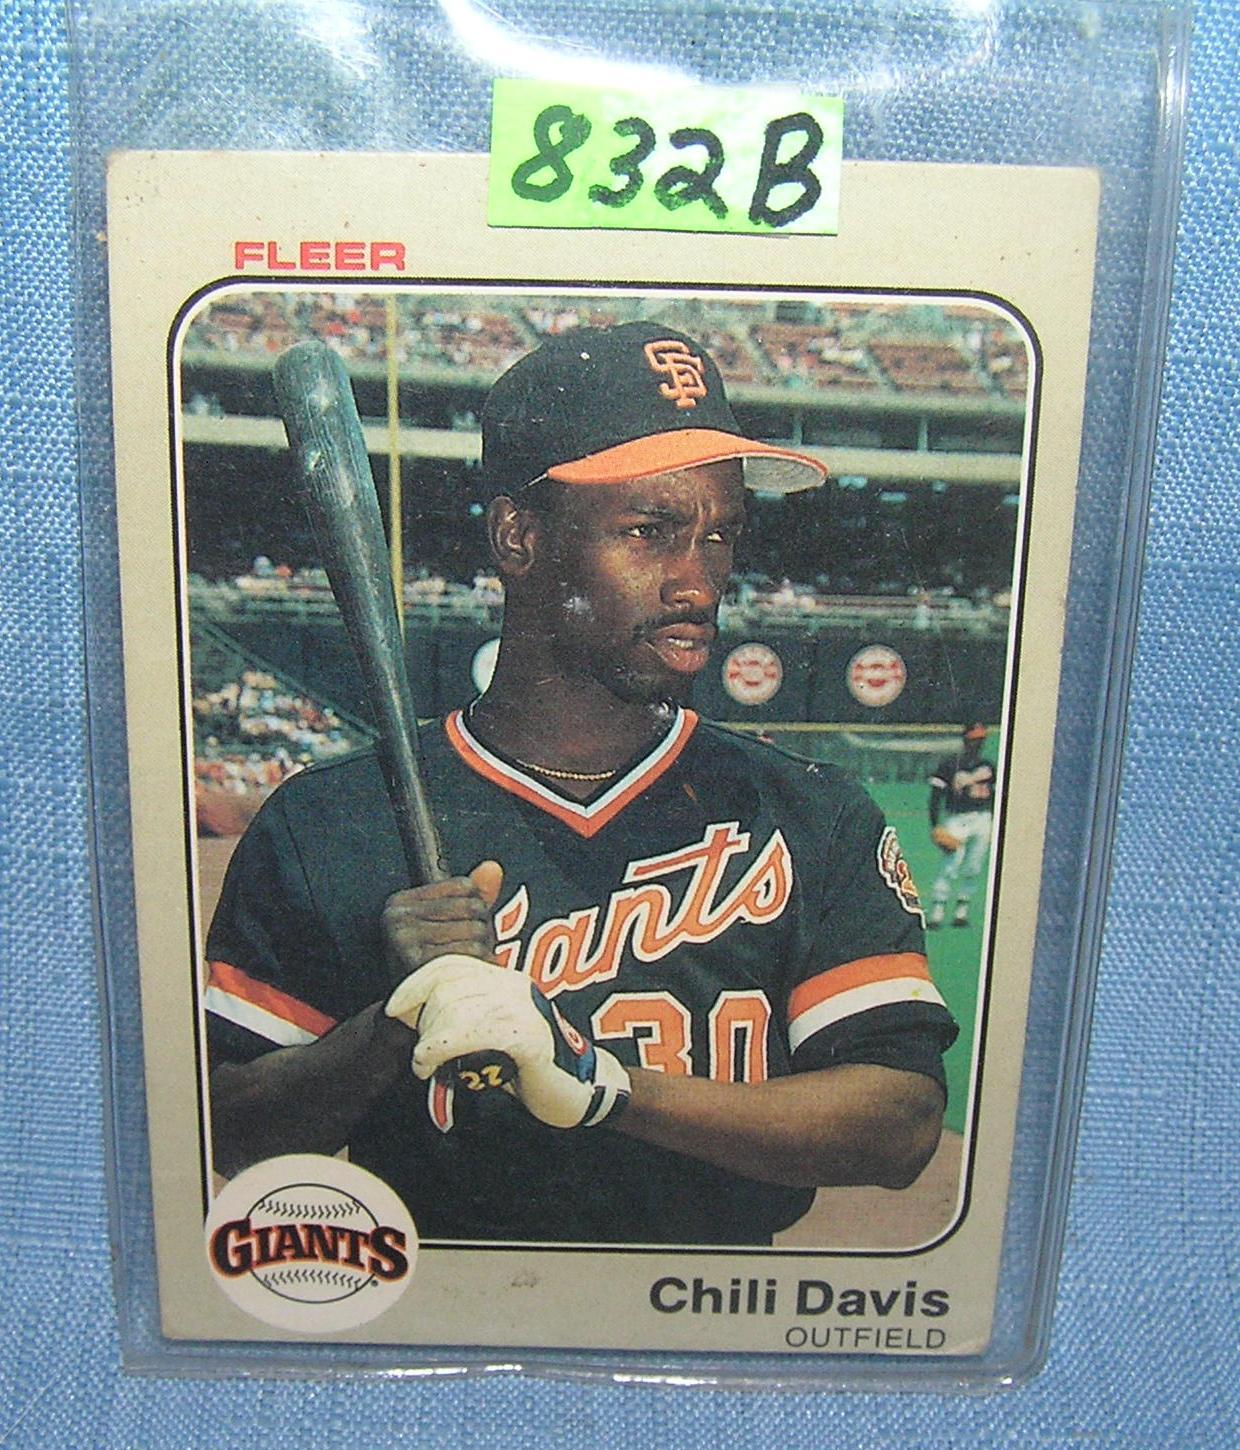 Chris Davis rookie baseball card